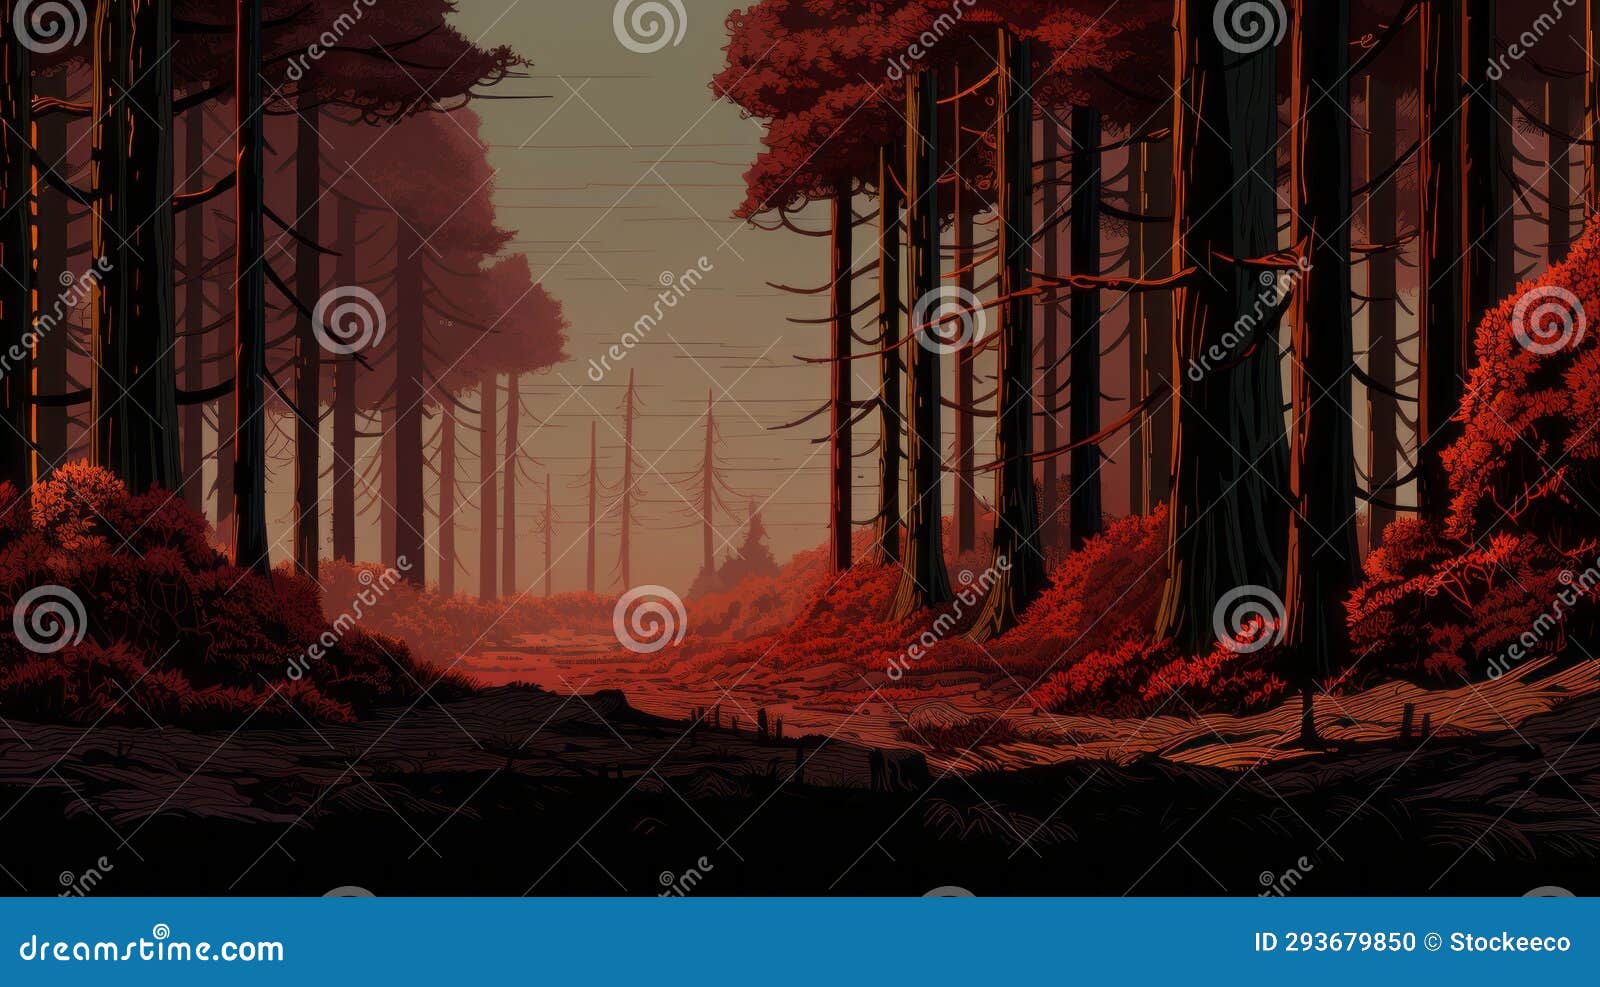 cedar forest firehouse: retrovirus 8-bit  with bold landscapes